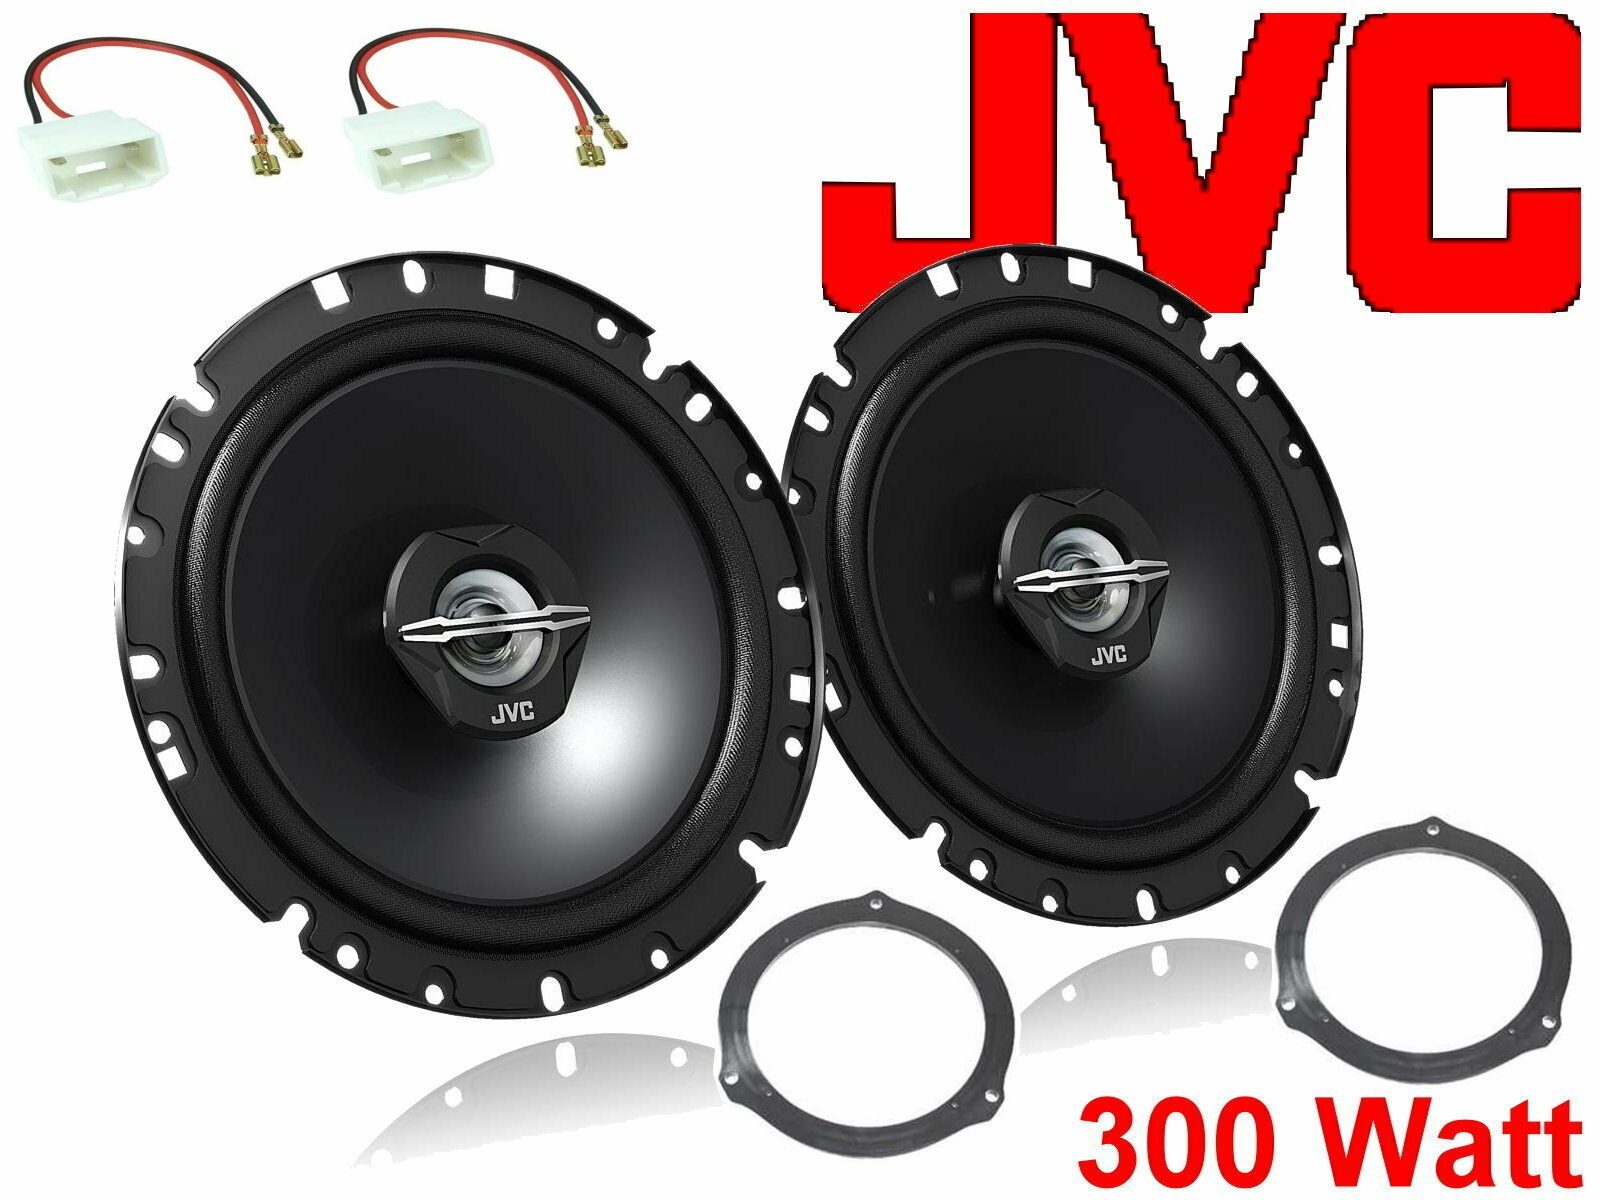 DSX JVC passend für Ford Galaxy WA6 Bj 05/06 -21 Lauts Auto-Lautsprecher (30 W)